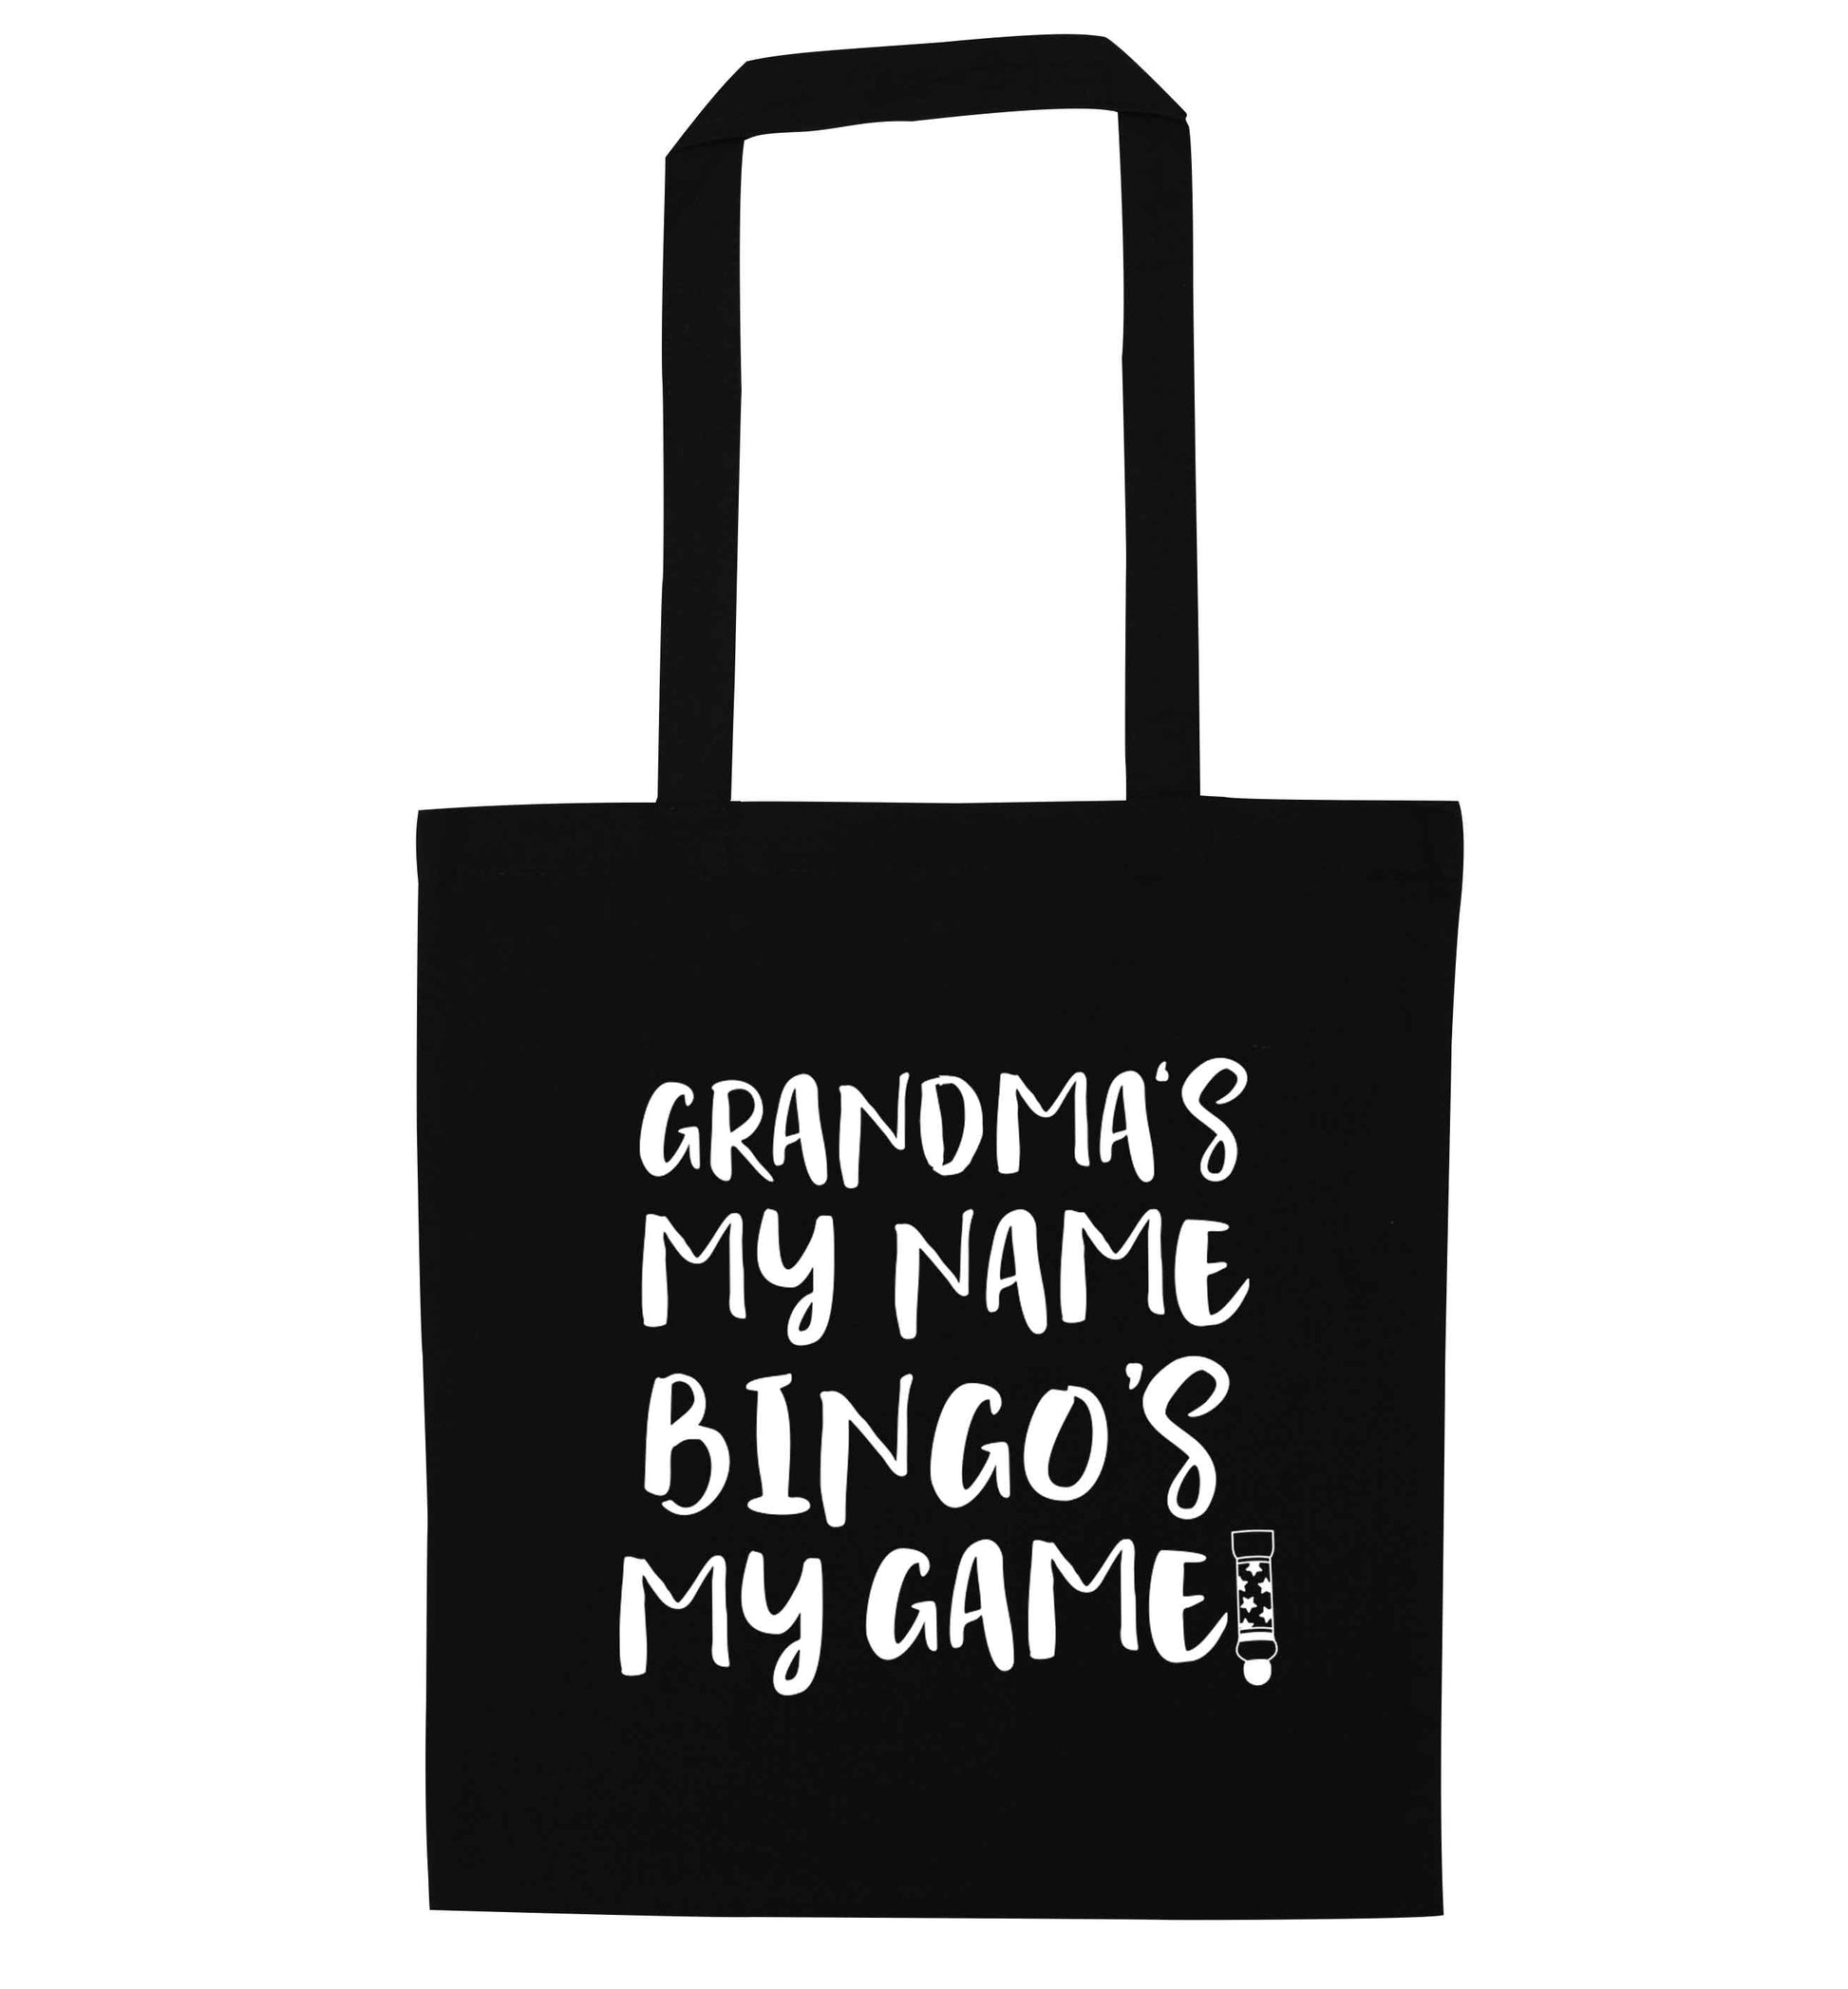 Grandma's my name bingo's my game! black tote bag